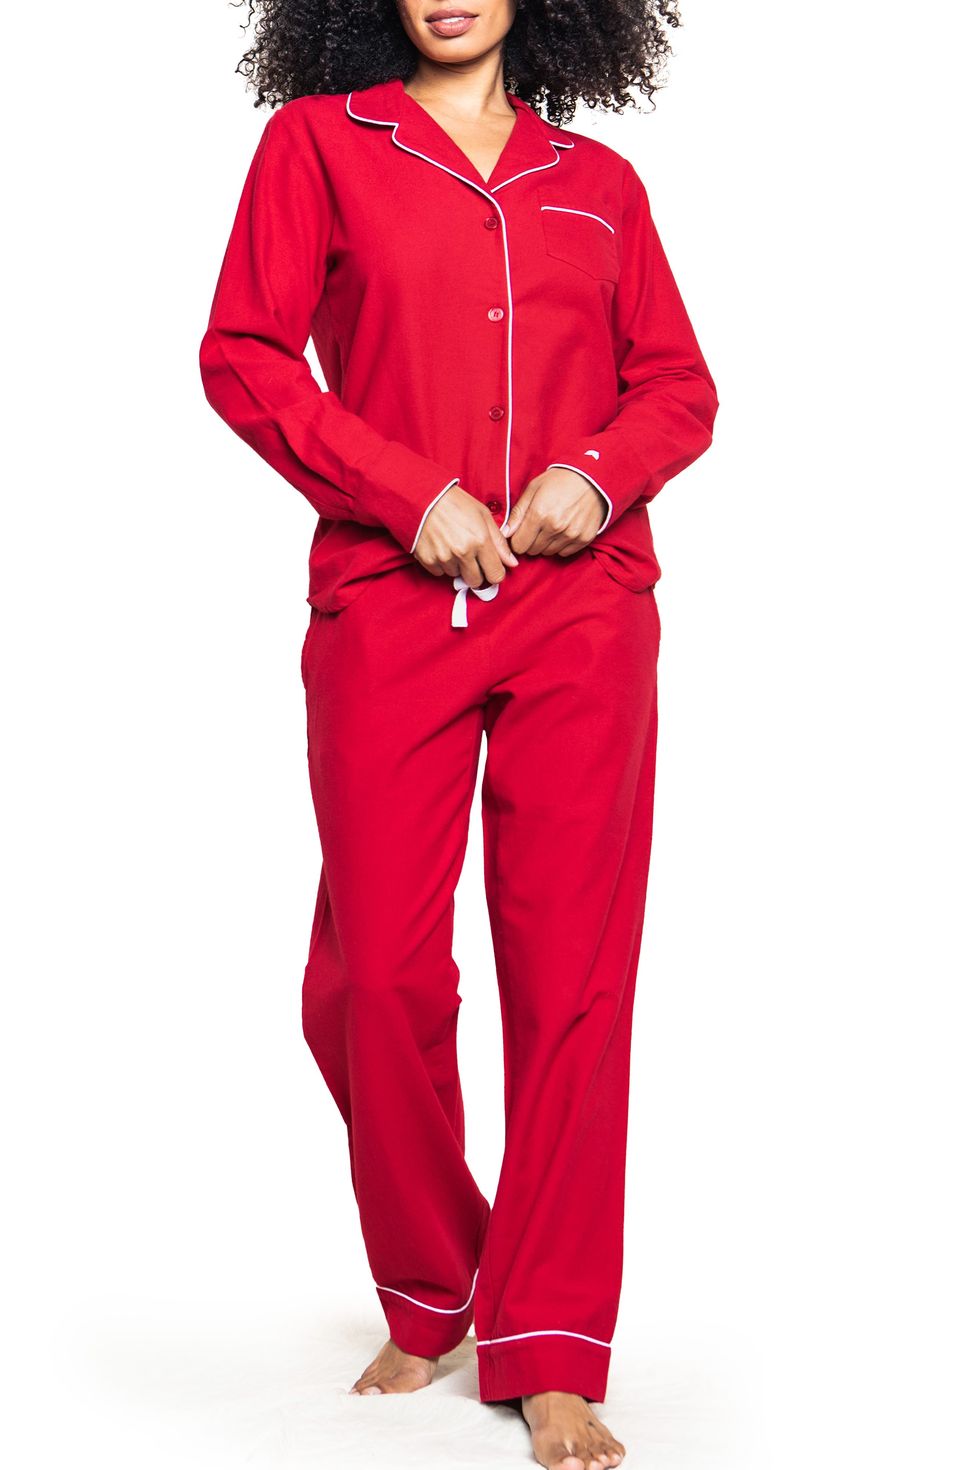 GLOBAL Women's Flannel Pajamas Set 100% Cotton PJs for Women Long